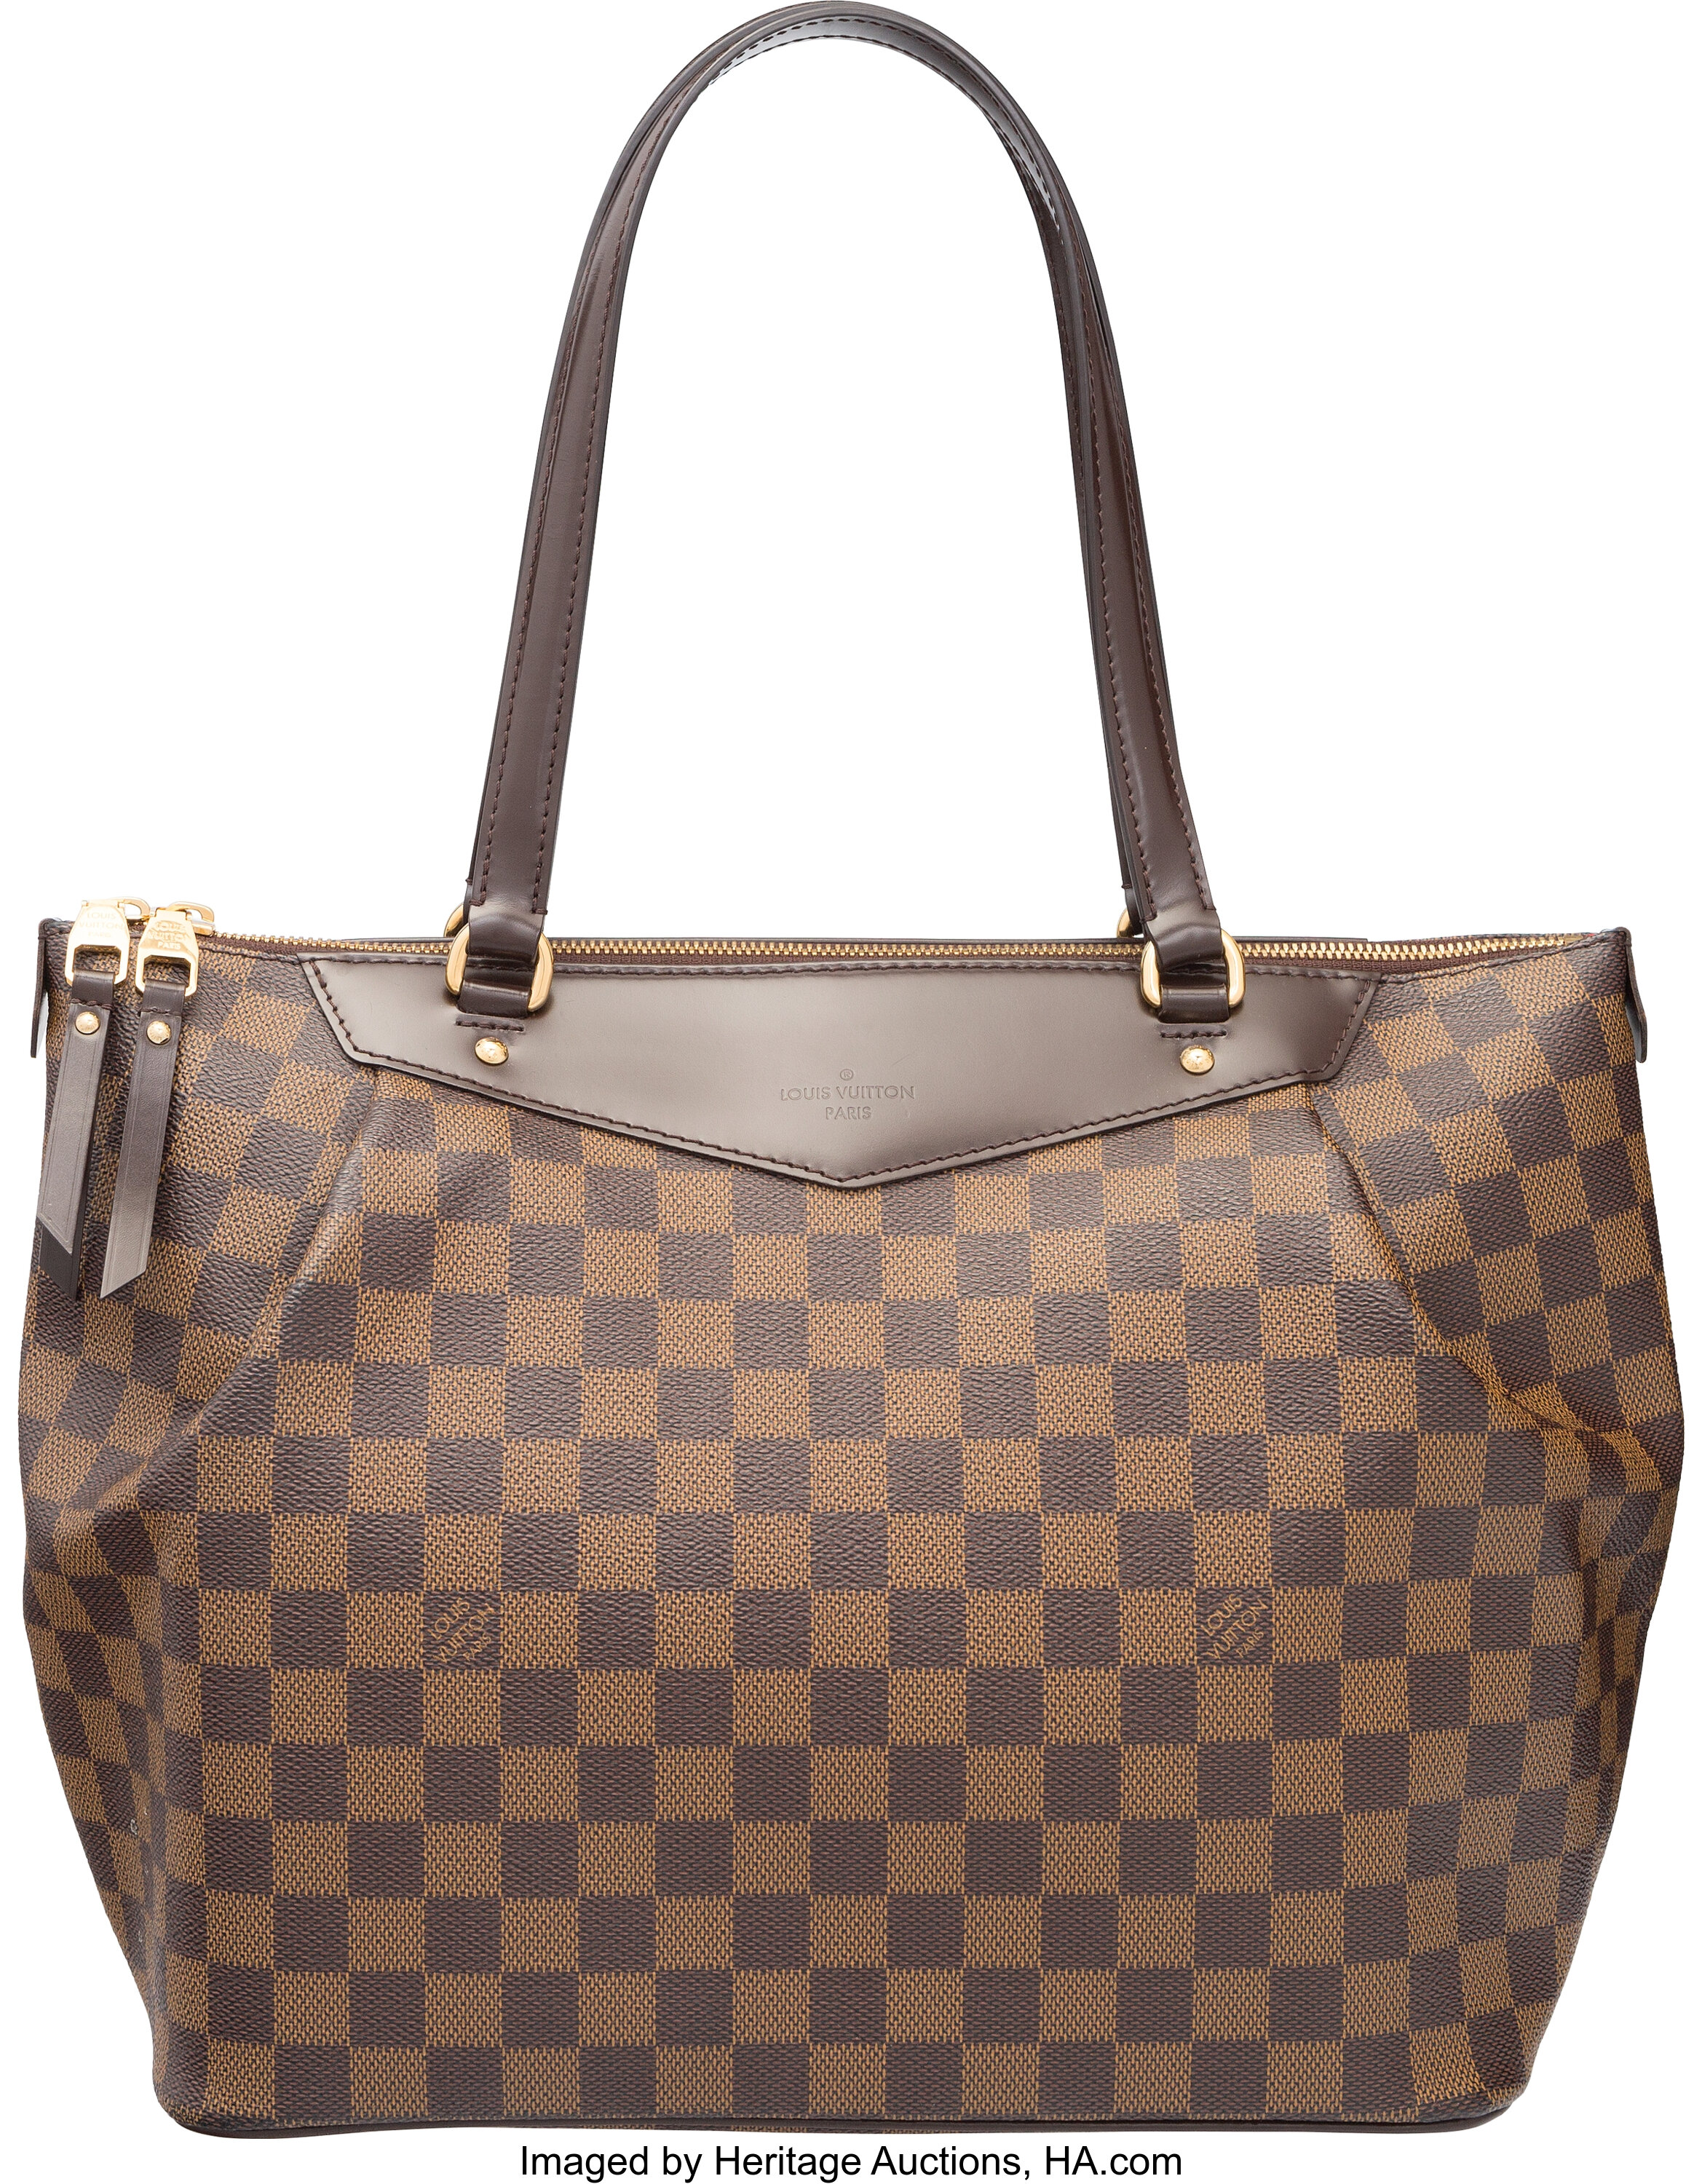 Sold at Auction: Louis Vuitton Damier Ebene Hobo Bag